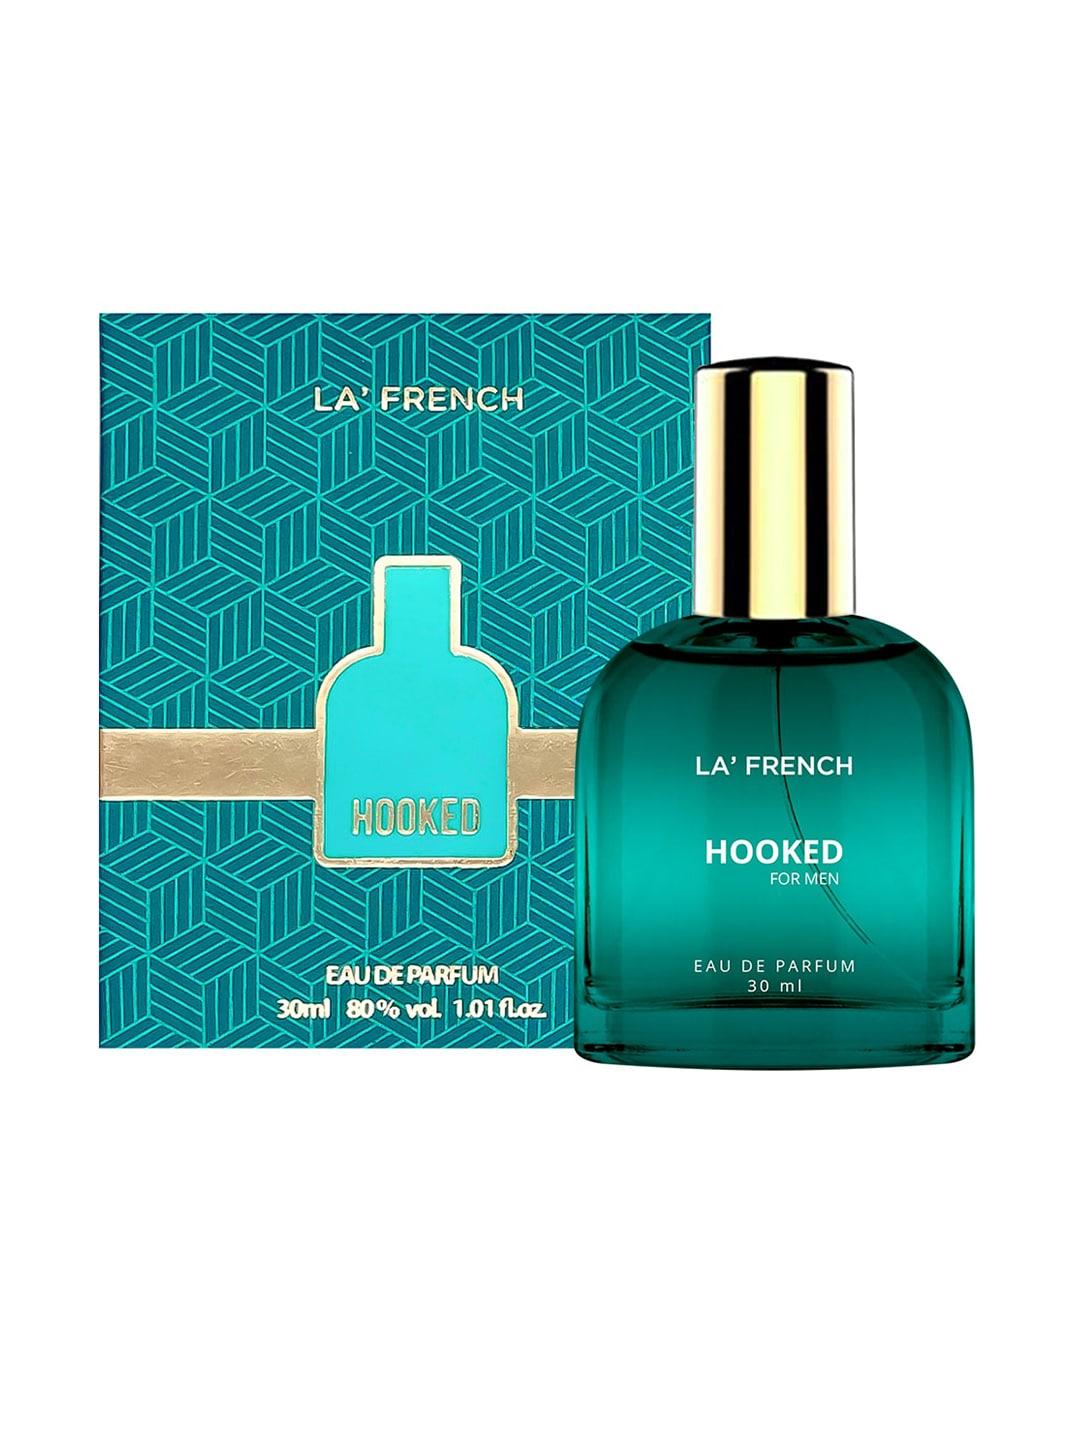 la french 2-pcs hooked & hope long lasting eau de parfum - 30ml each